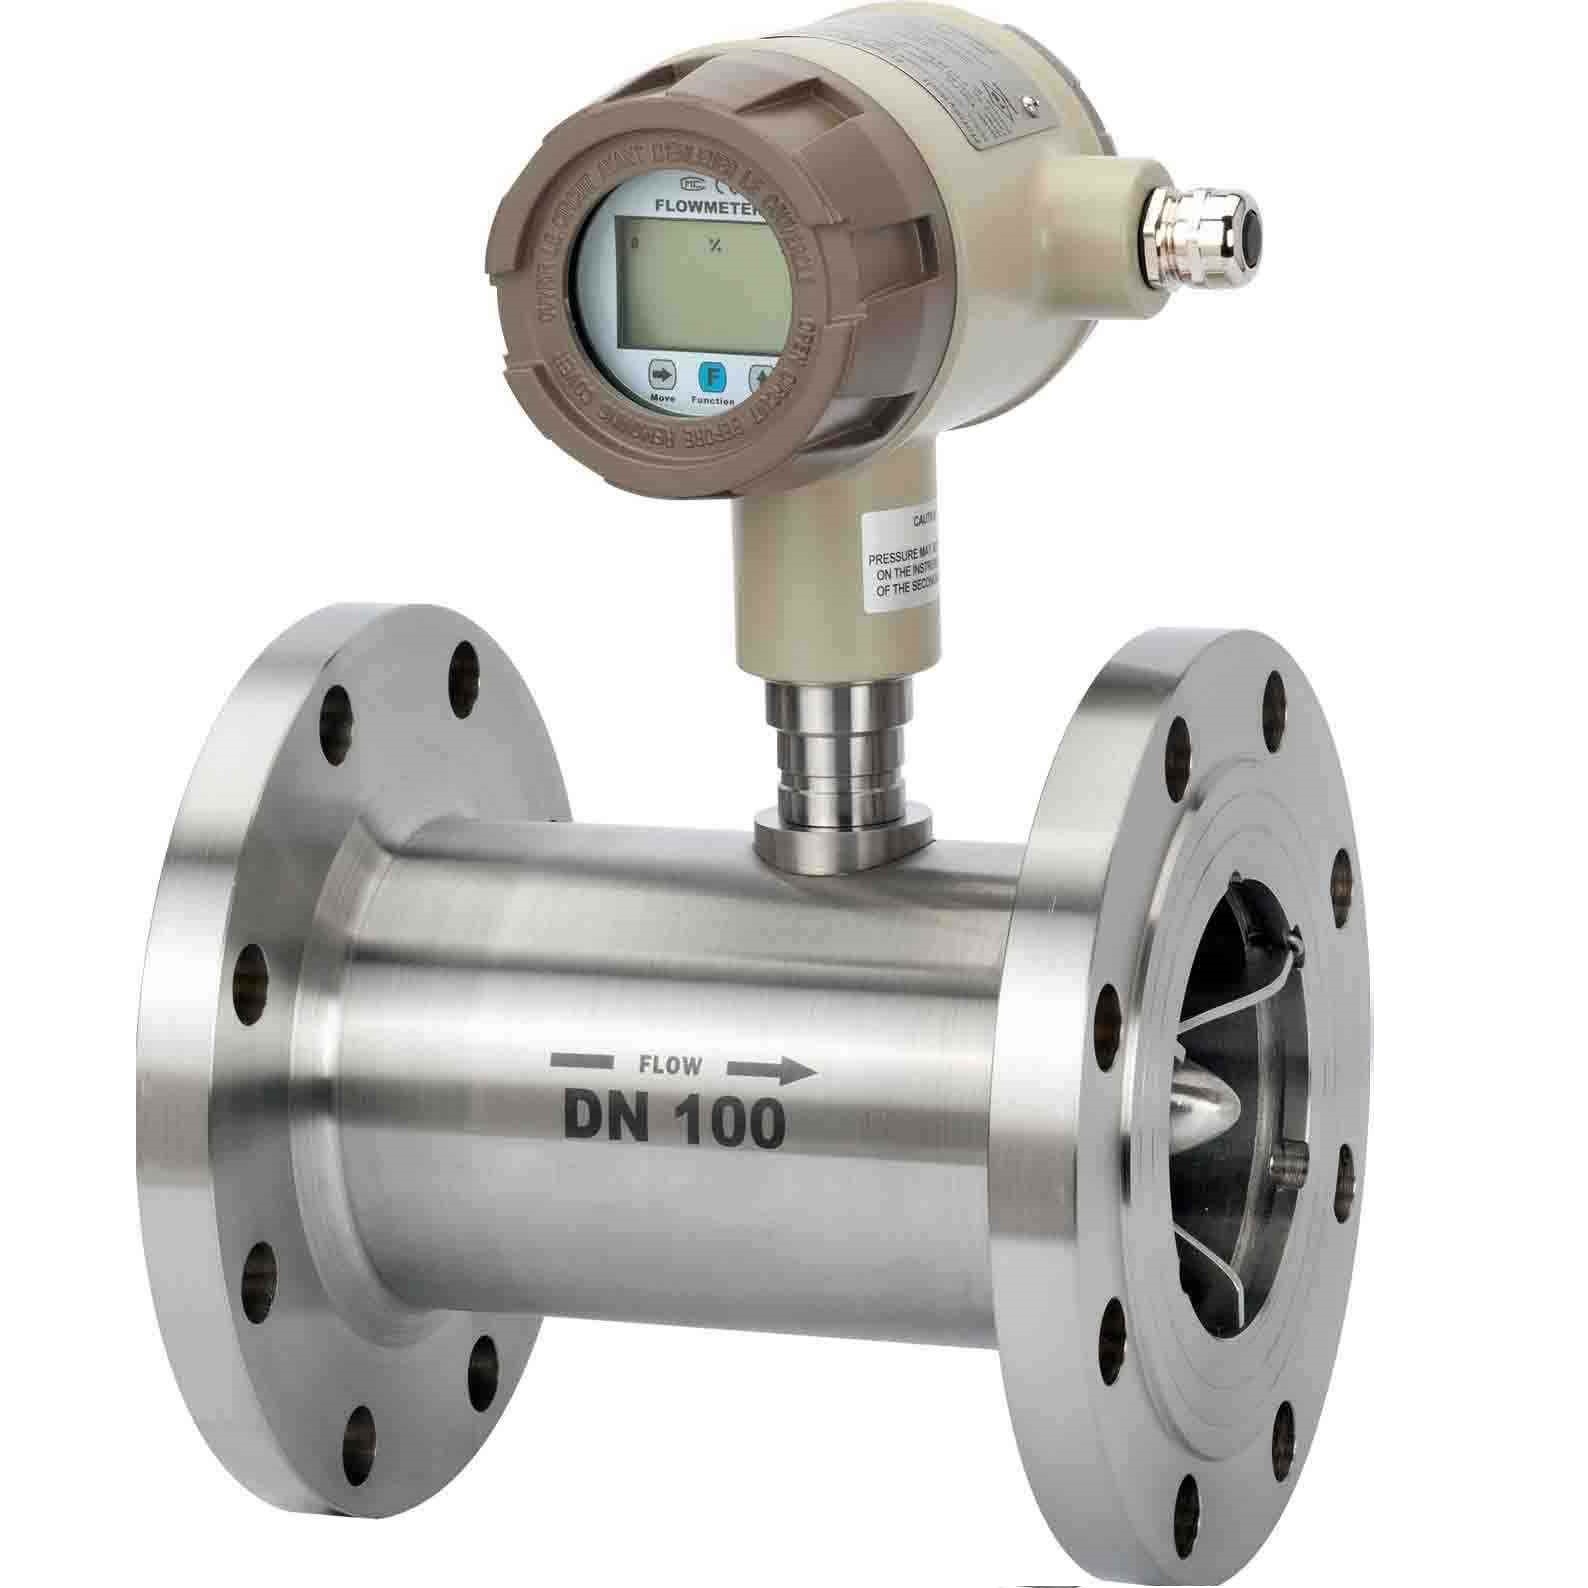 Digital turbine flow meter for hydraulic oil